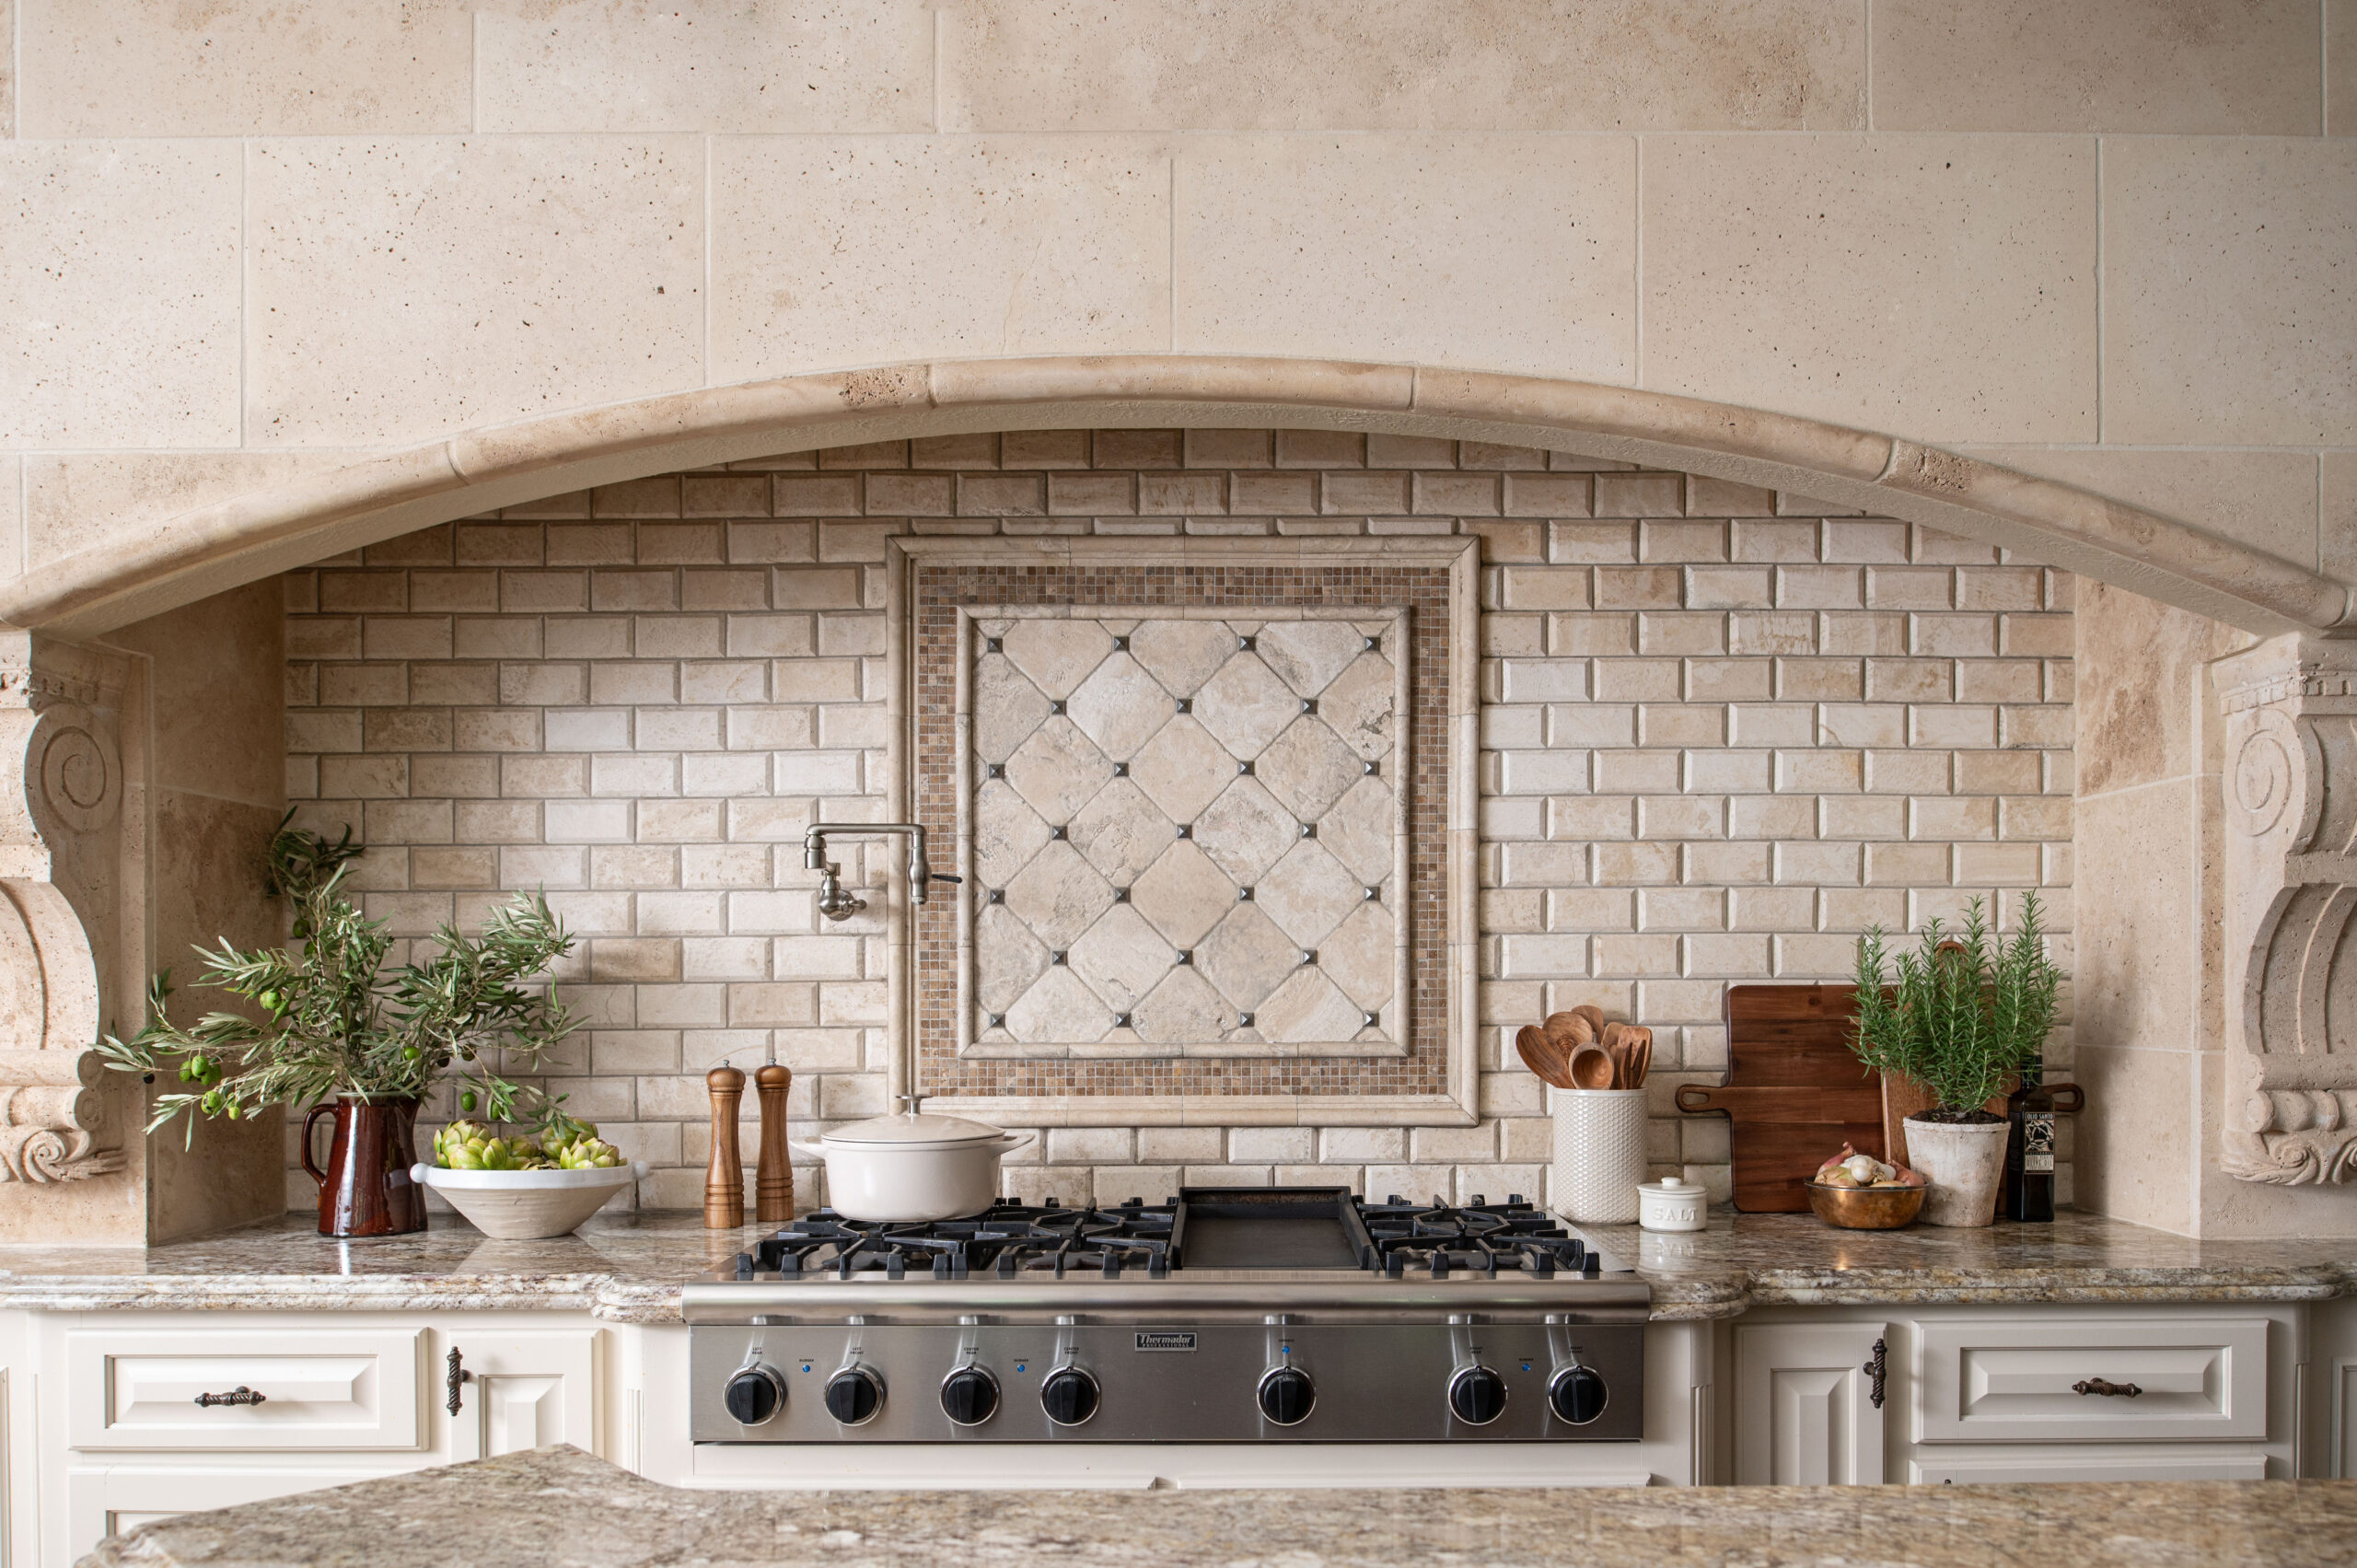 Beautiful interior design photos of a transitional kitchen